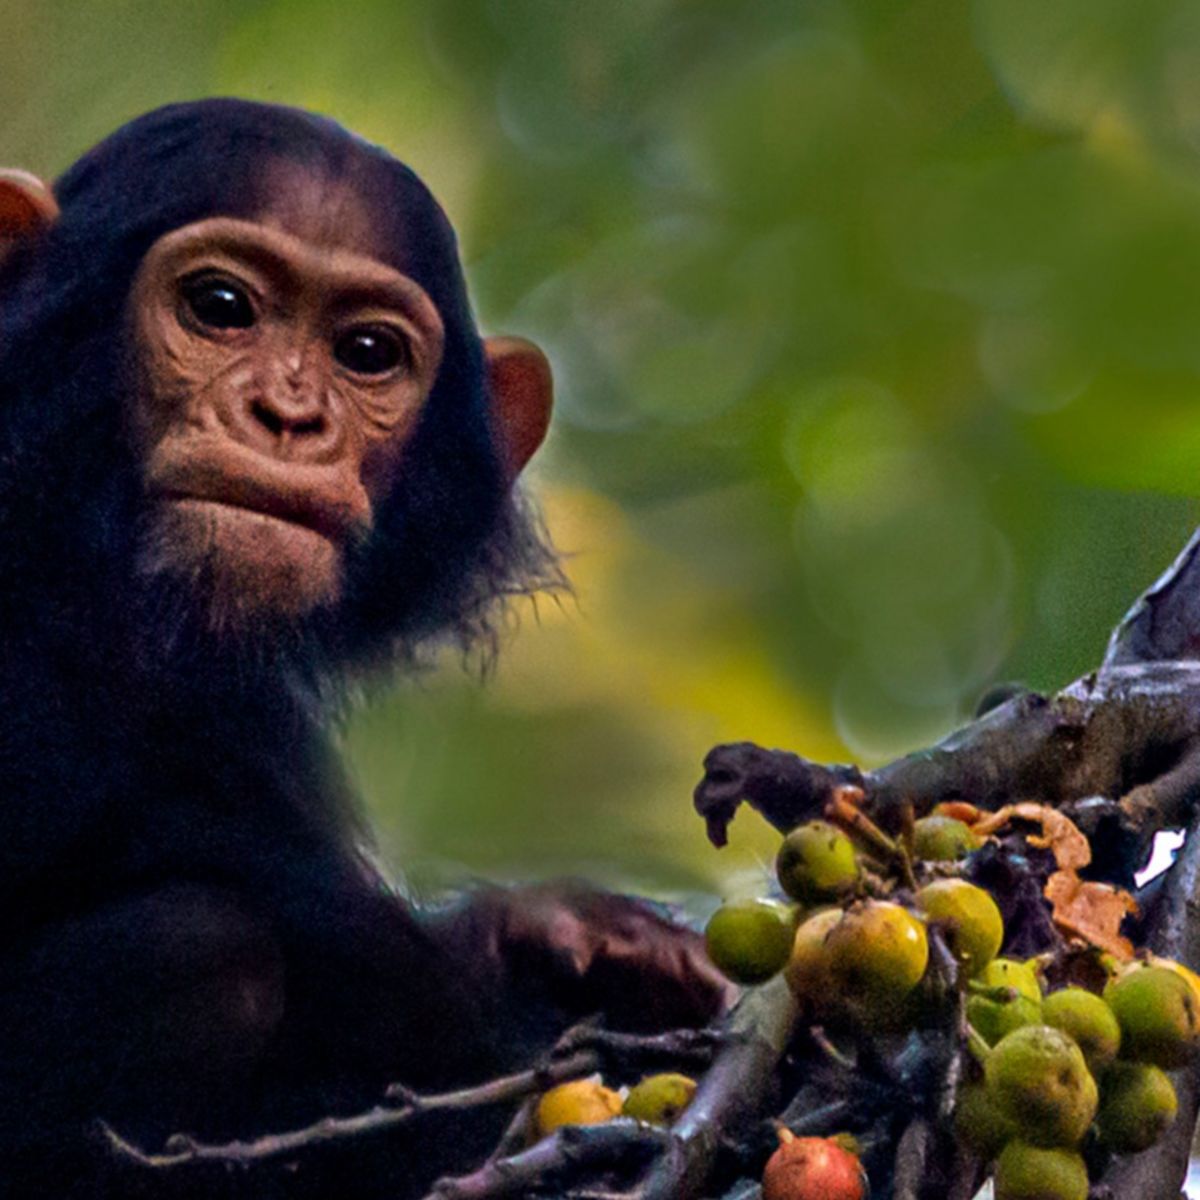 Ours. Infant chimpanzee Kibale Forest Uganda